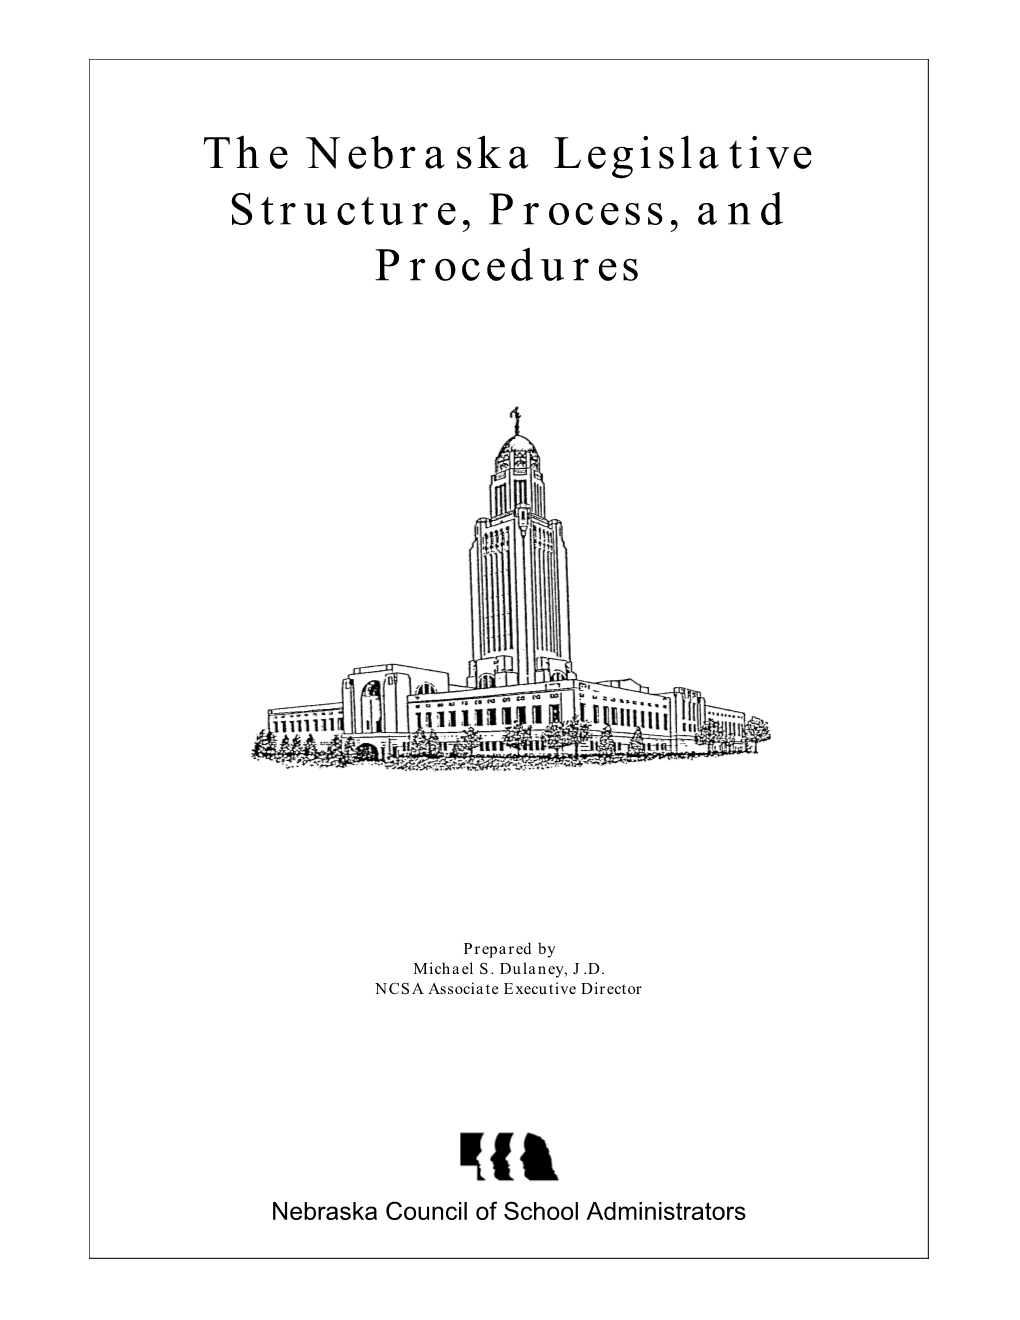 The Nebraska Legislative Structure, Process, and Procedures